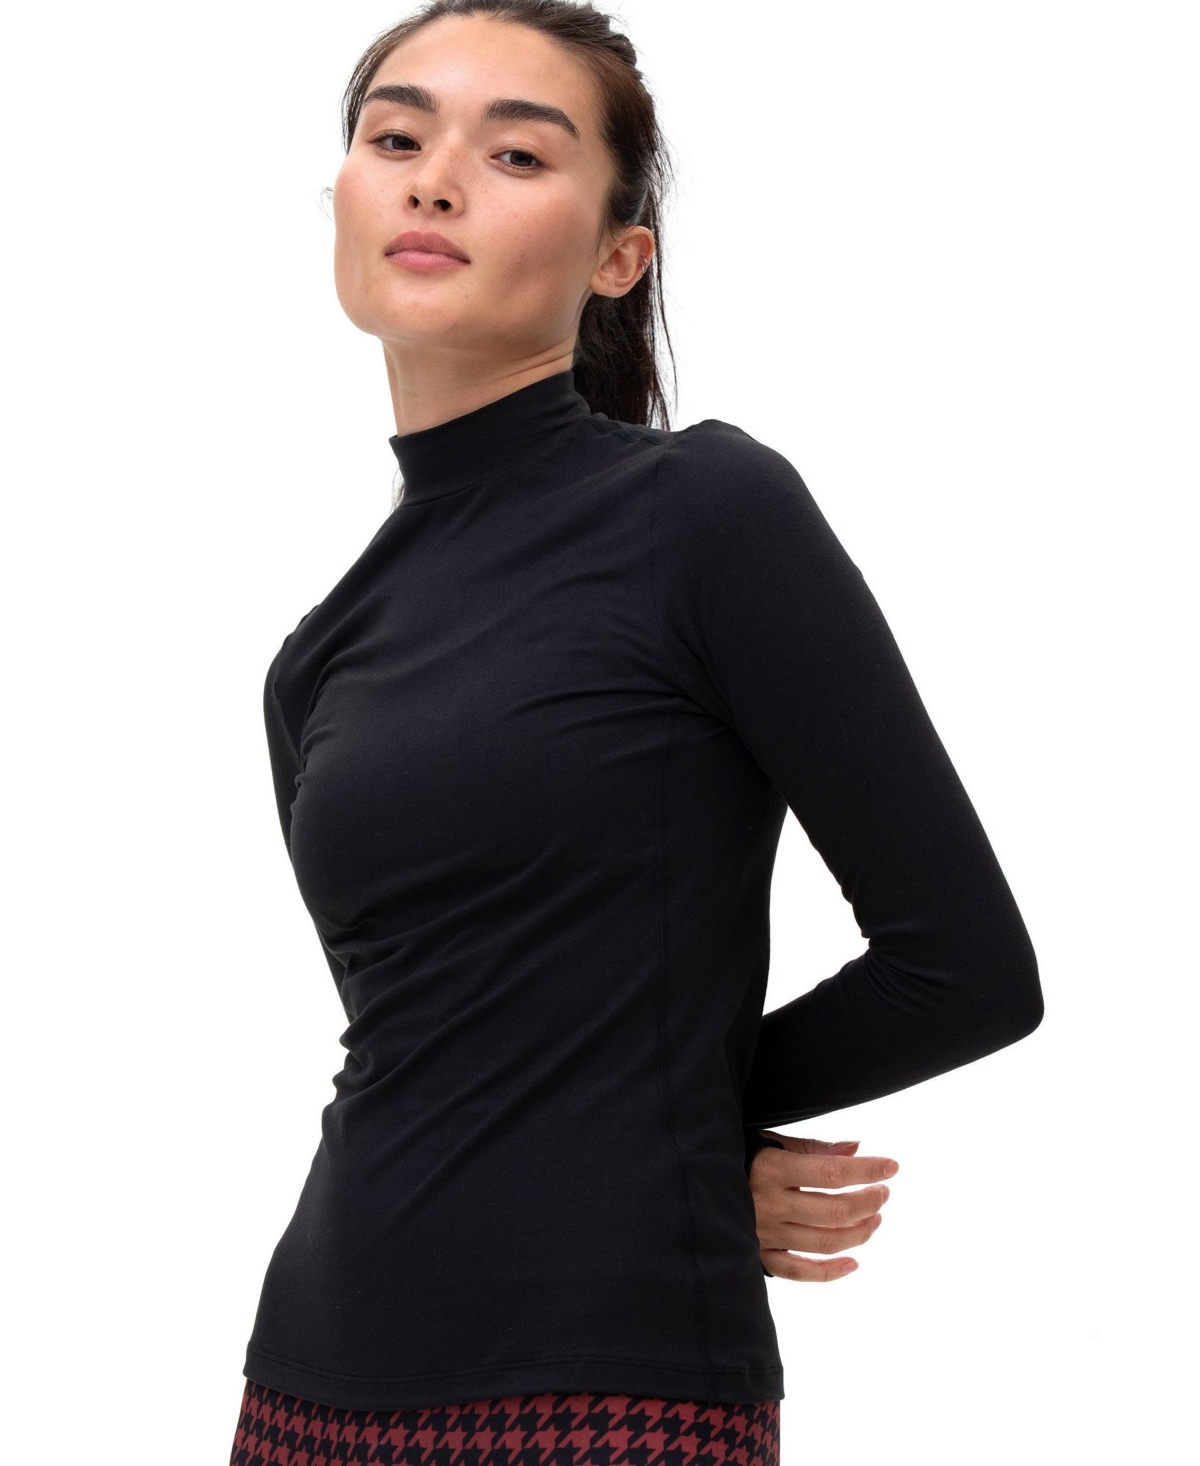 Women's Cozy Mock Neck Long Sleeve Top for Women - Cozy Black